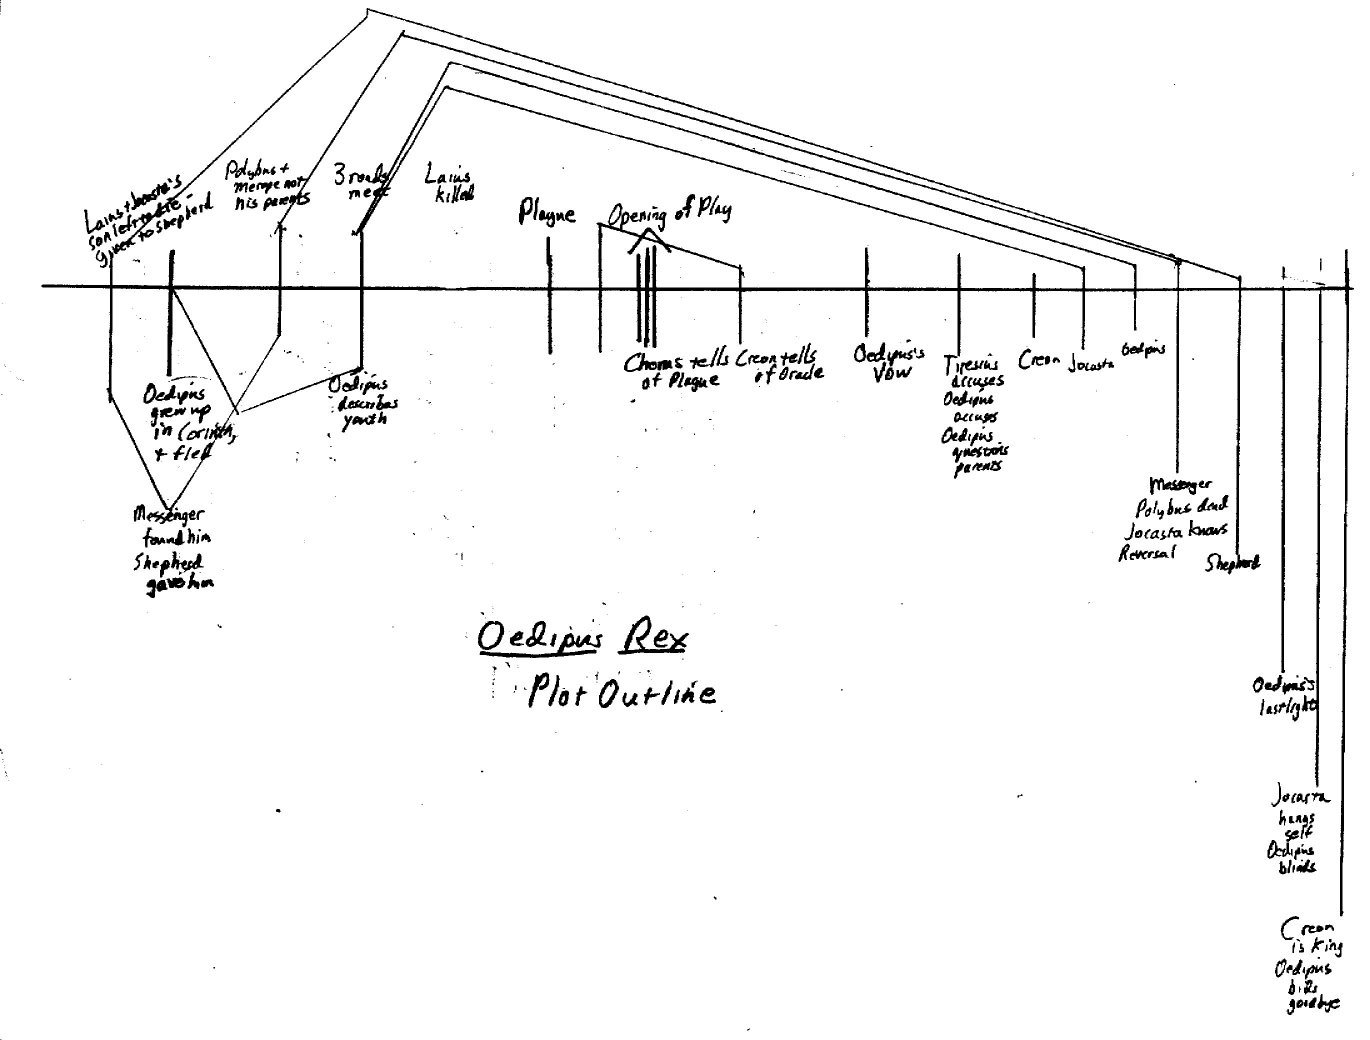 Hand-drawn chart of Oedipus Rex plot